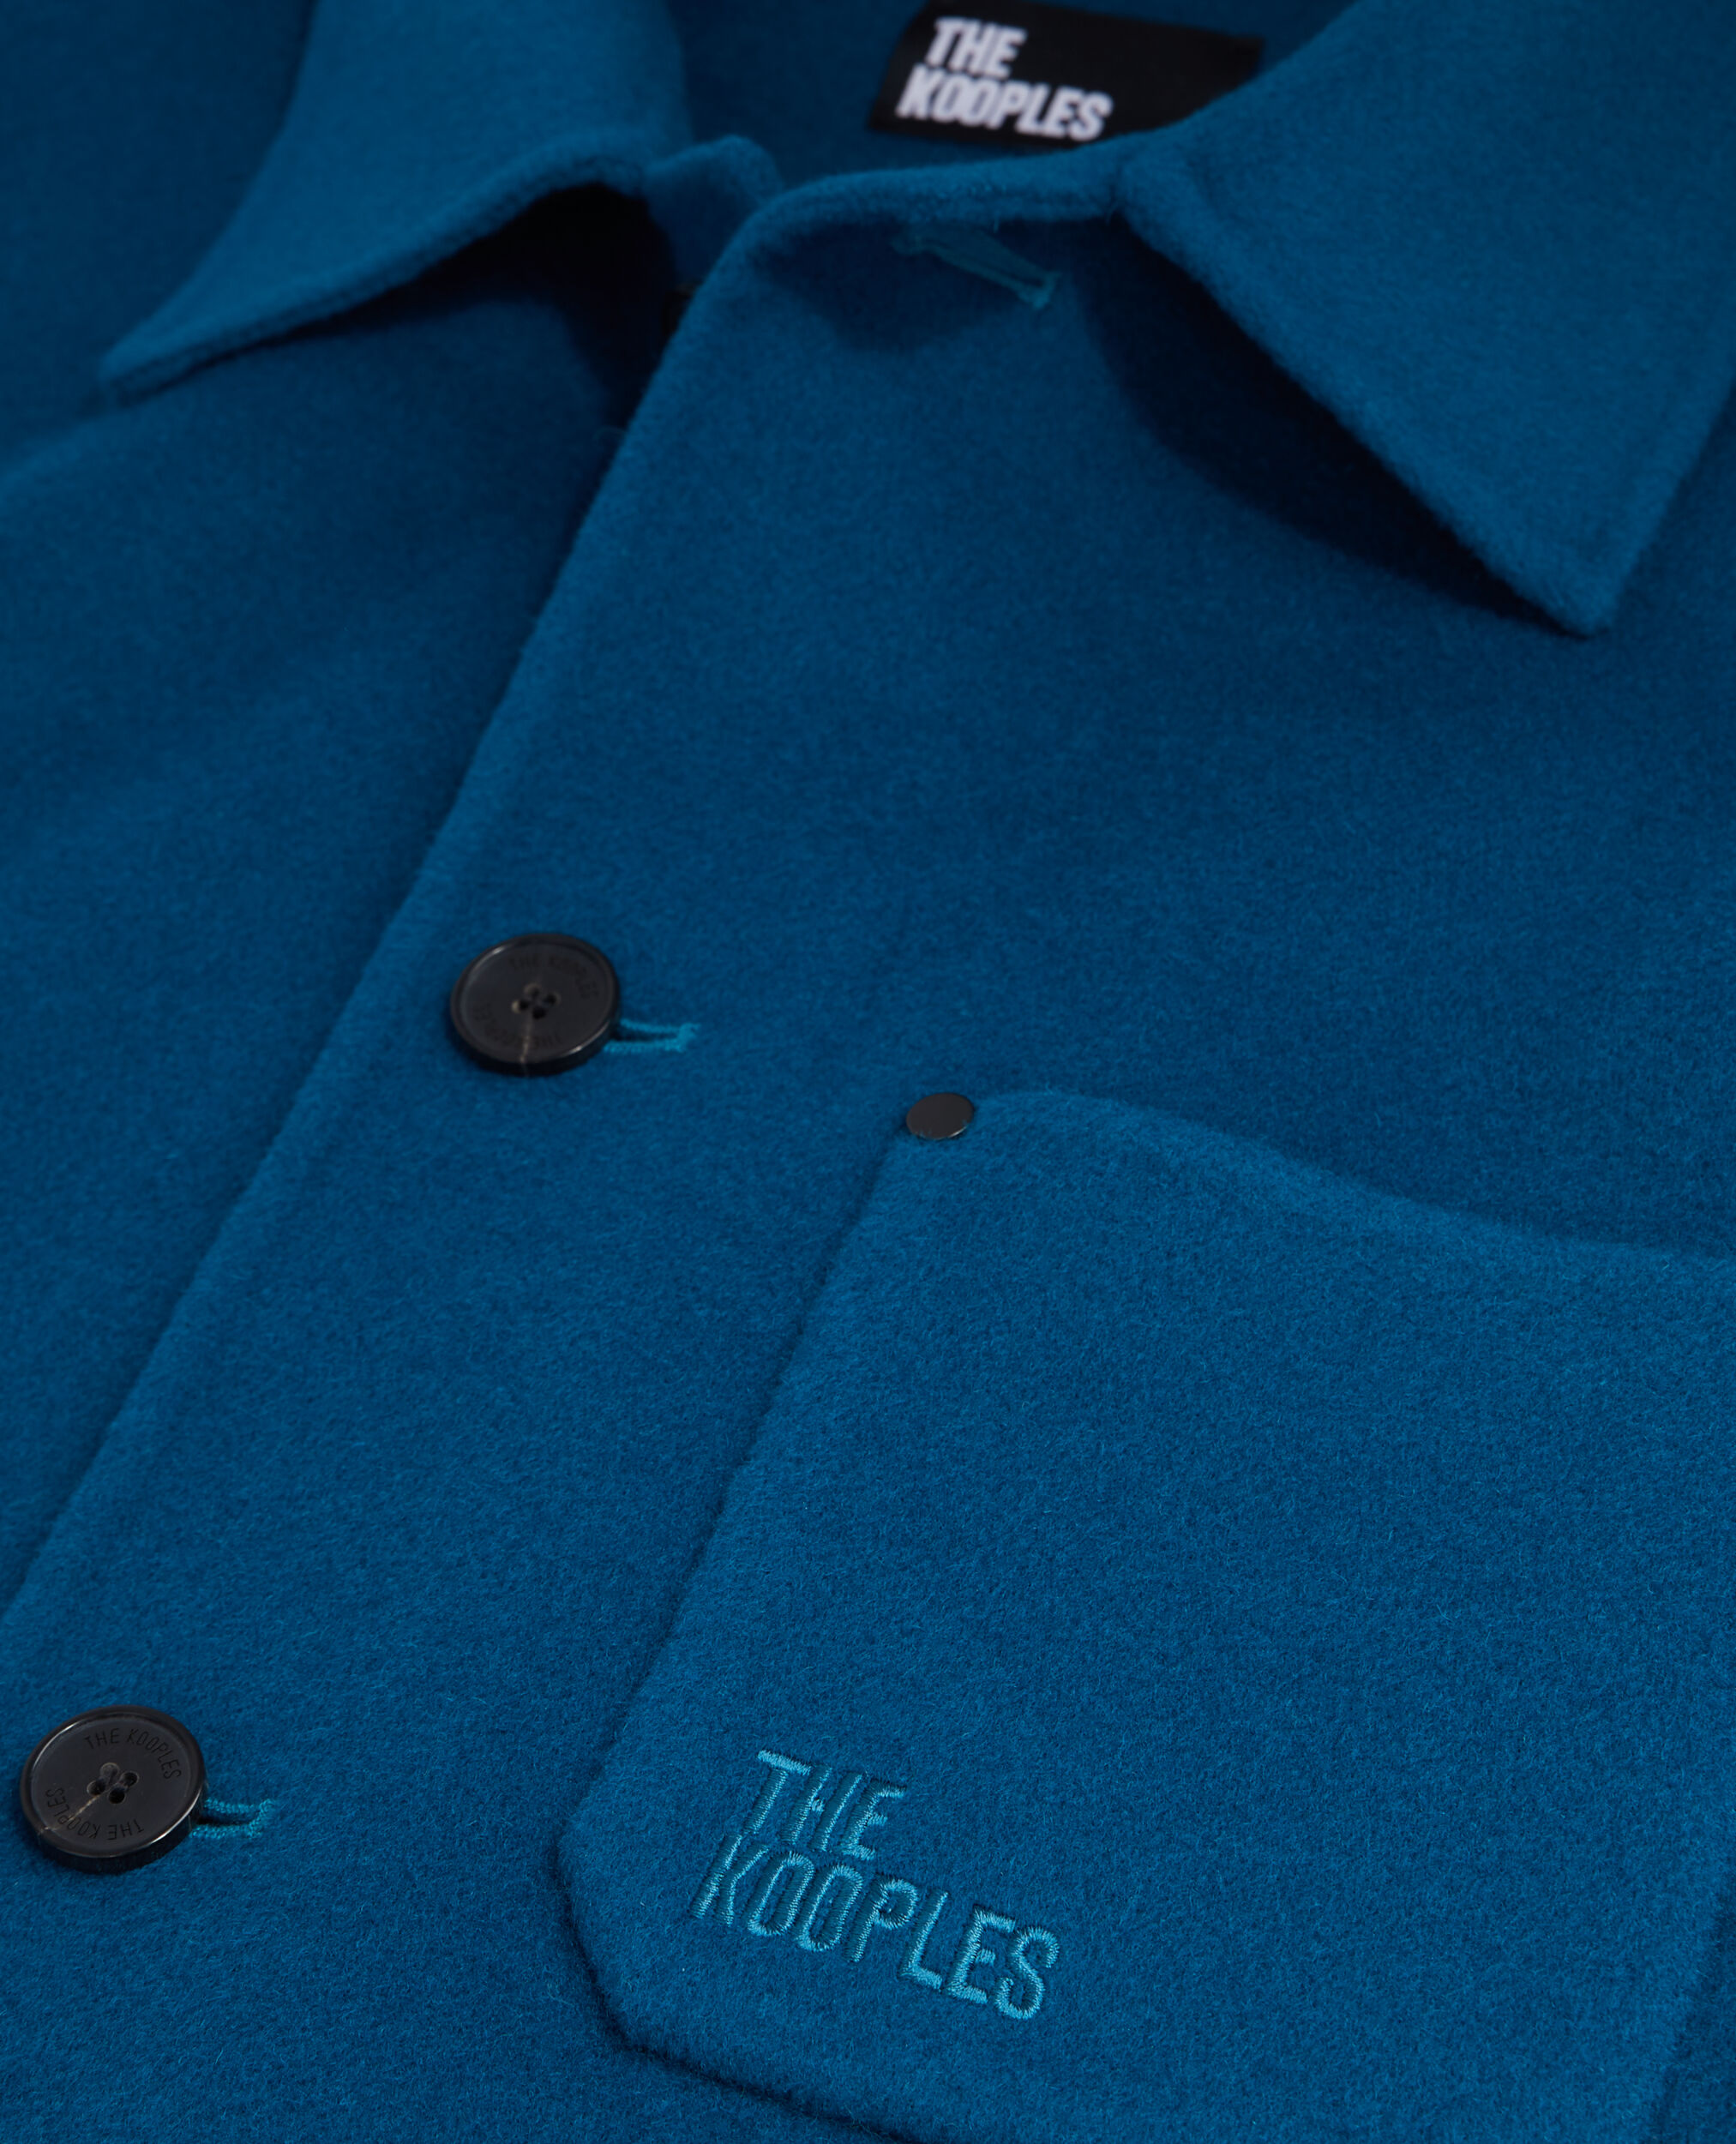 Blue wool overshirt style jacket, MEDIUM BLUE, hi-res image number null